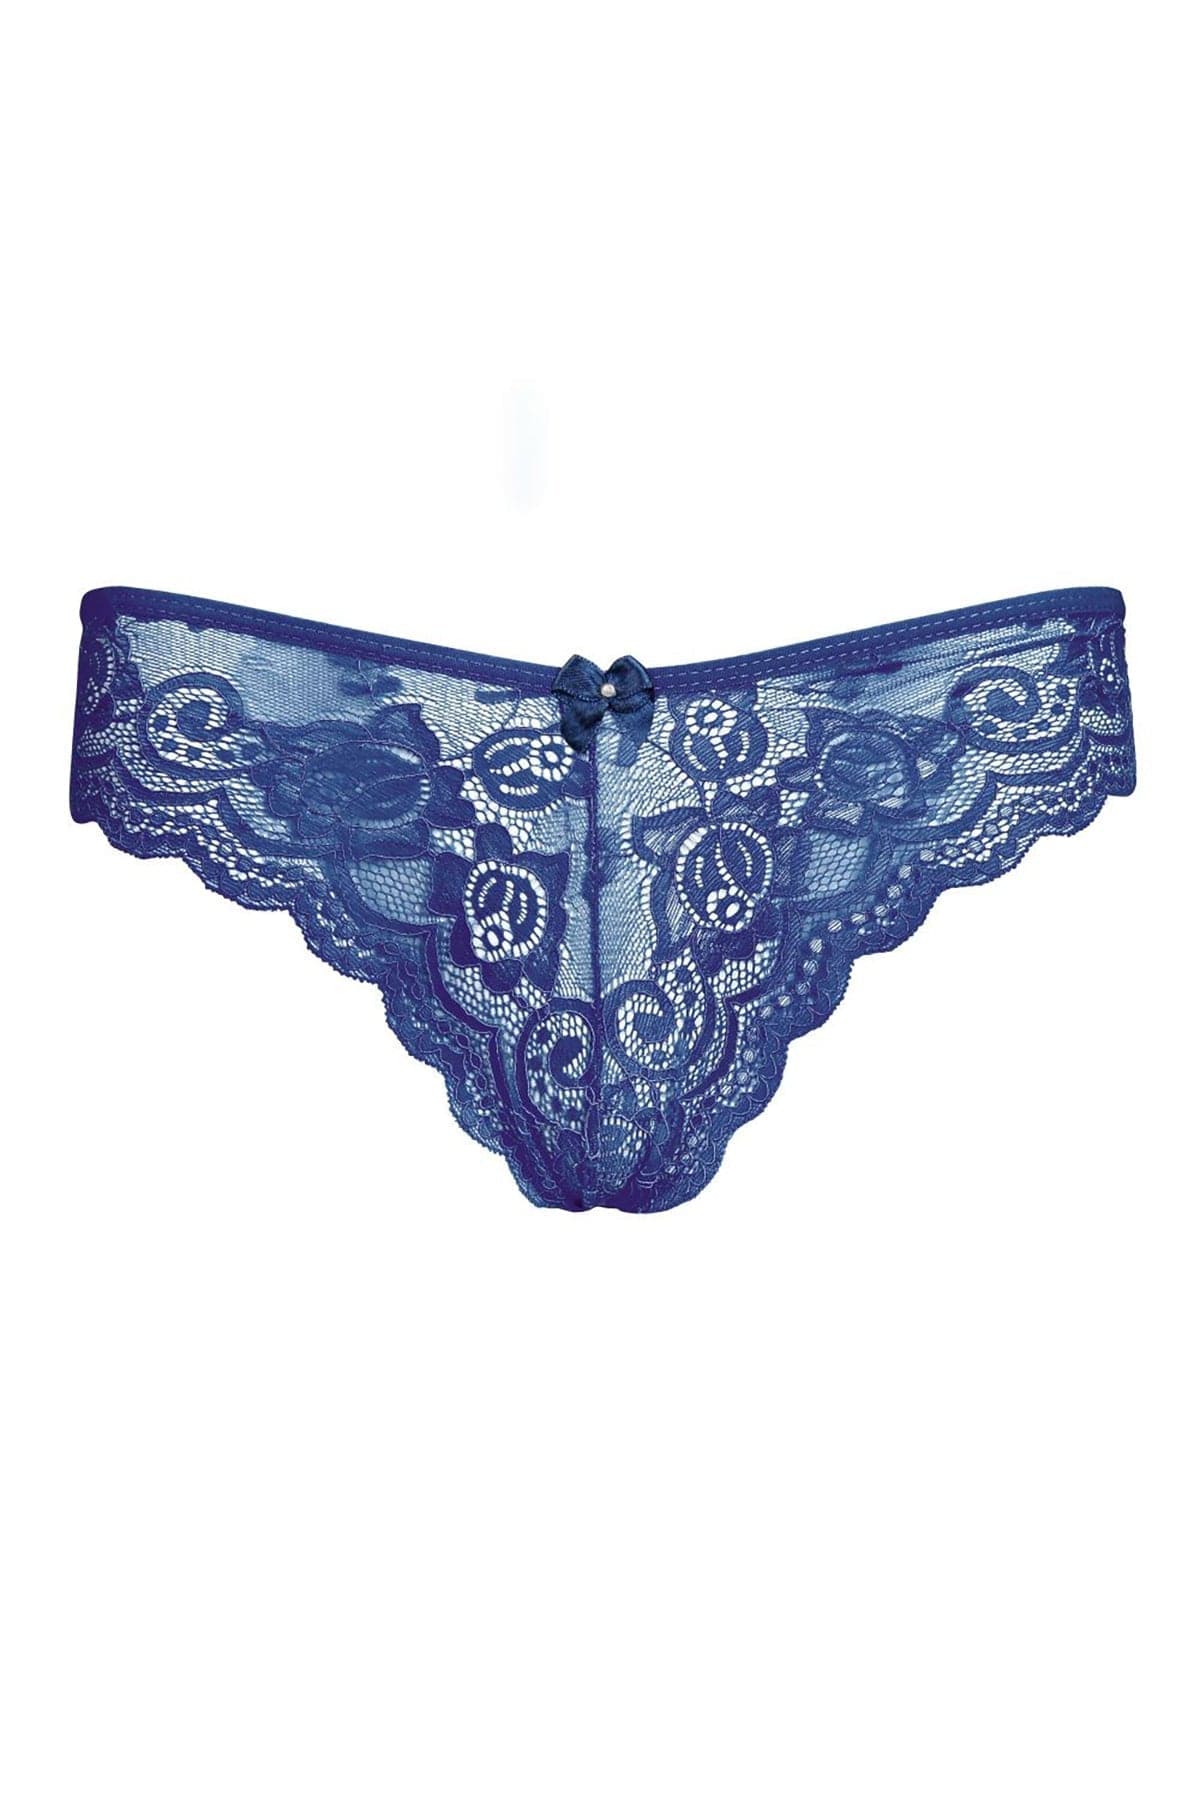 British Lingerie Studio Lulu Lace Panty - Navy Blue - Premium Panties from BLS - Just Rs 600! Shop now at Cozmetica